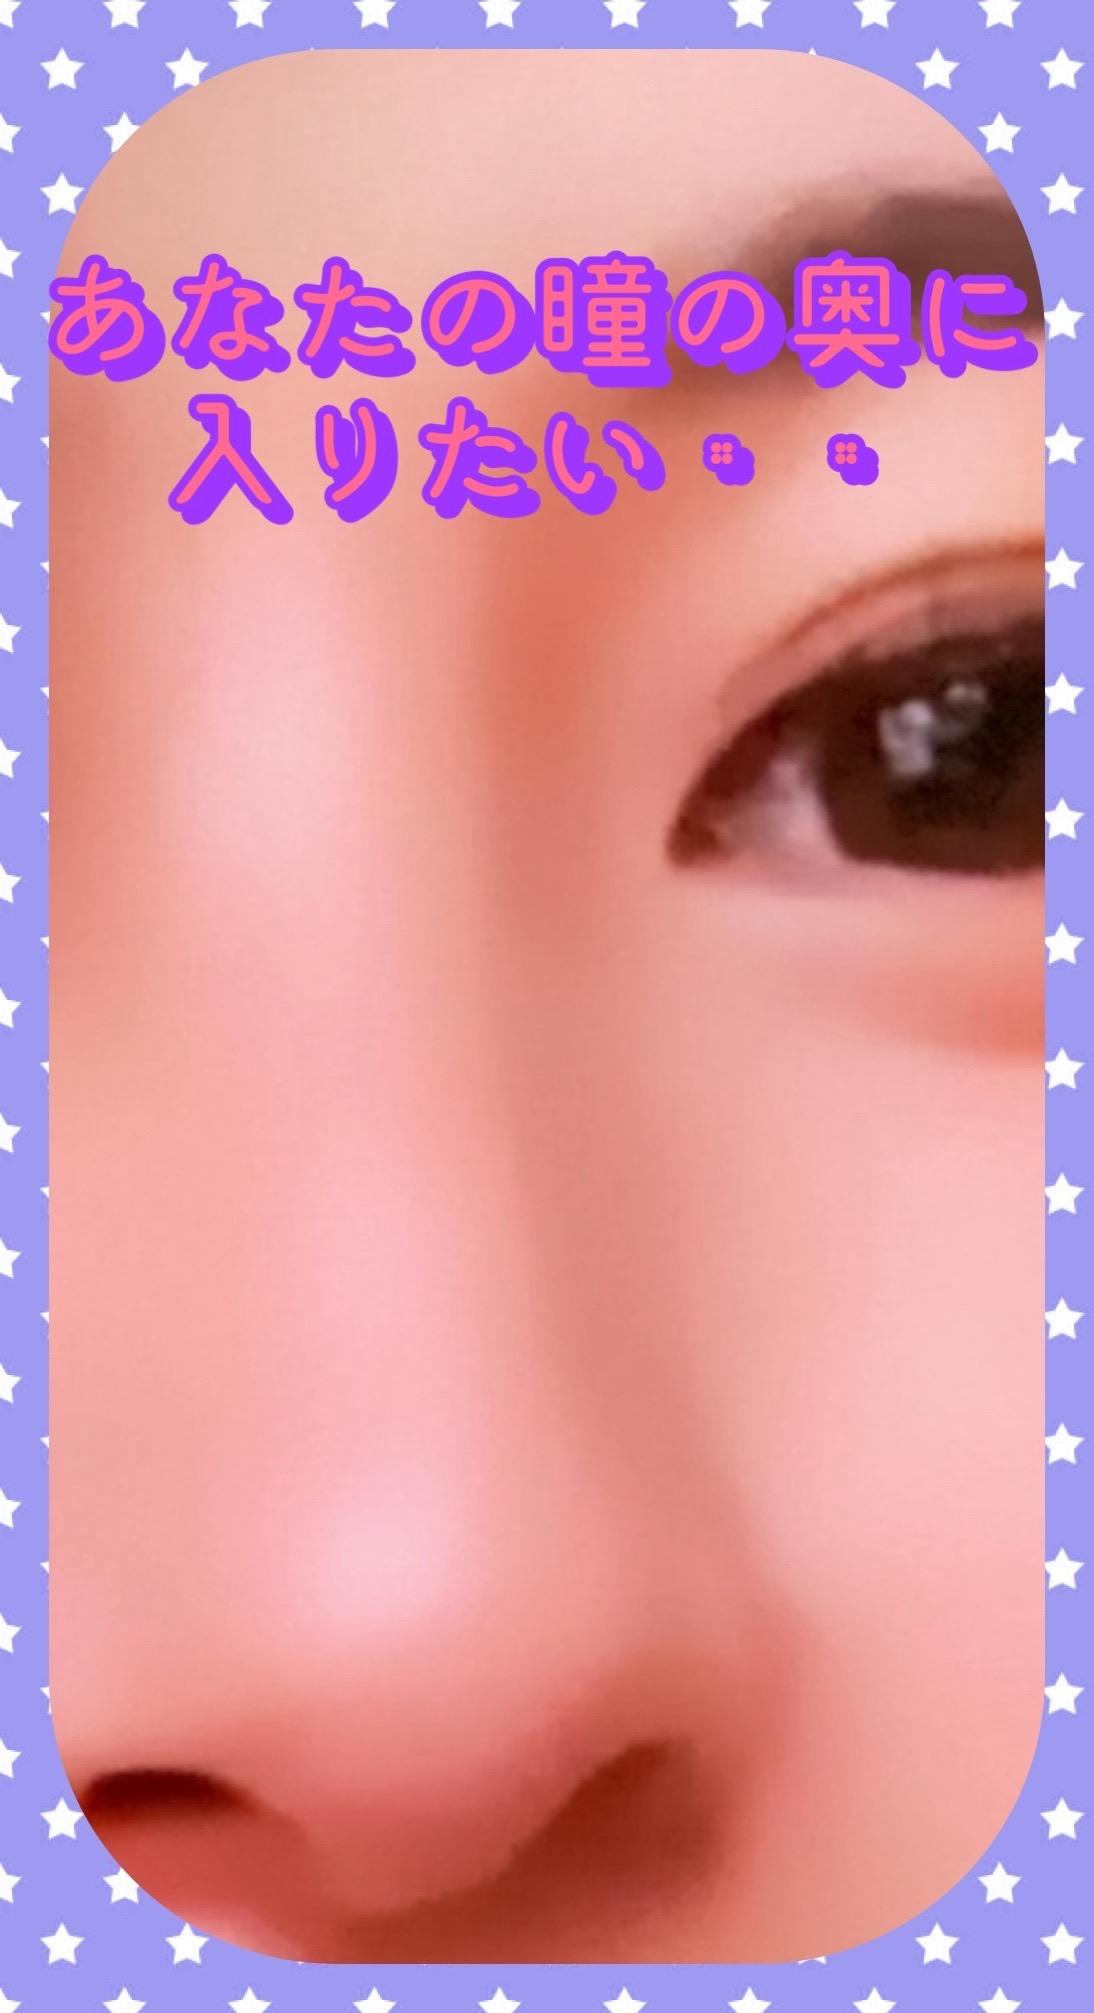 19時10分〜様<img class="emojione" alt="✨" title=":sparkles:" src="https://fuzoku.jp/assets/img/emojione/2728.png"/>